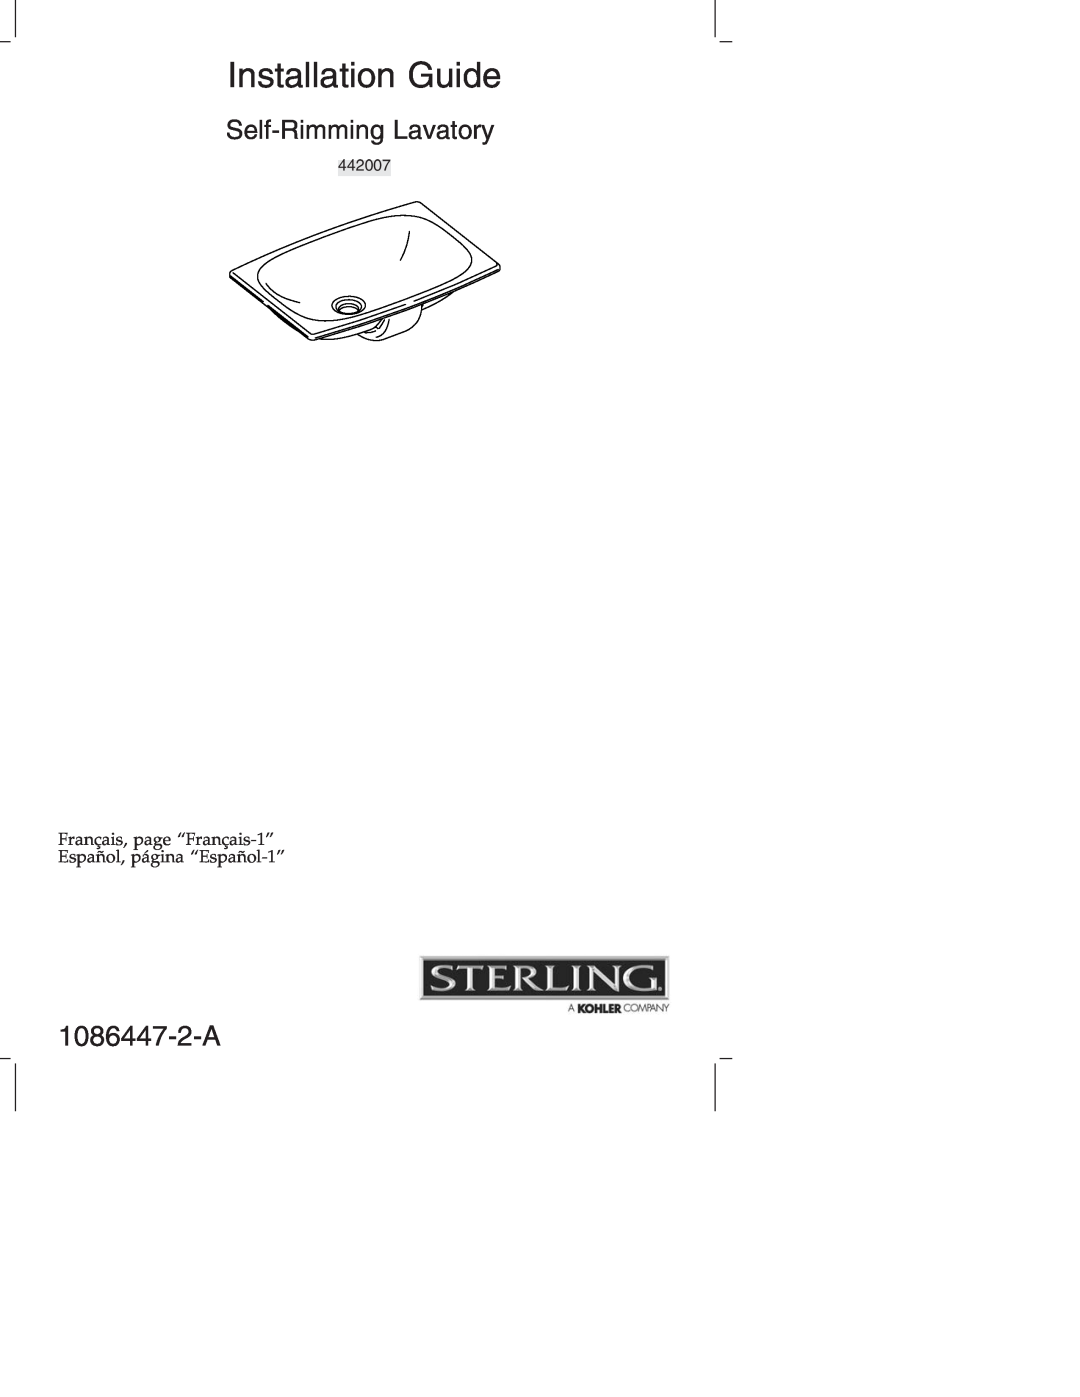 Sterling 1086447-2-A manual Installation Guide, Self-RimmingLavatory, 442007 